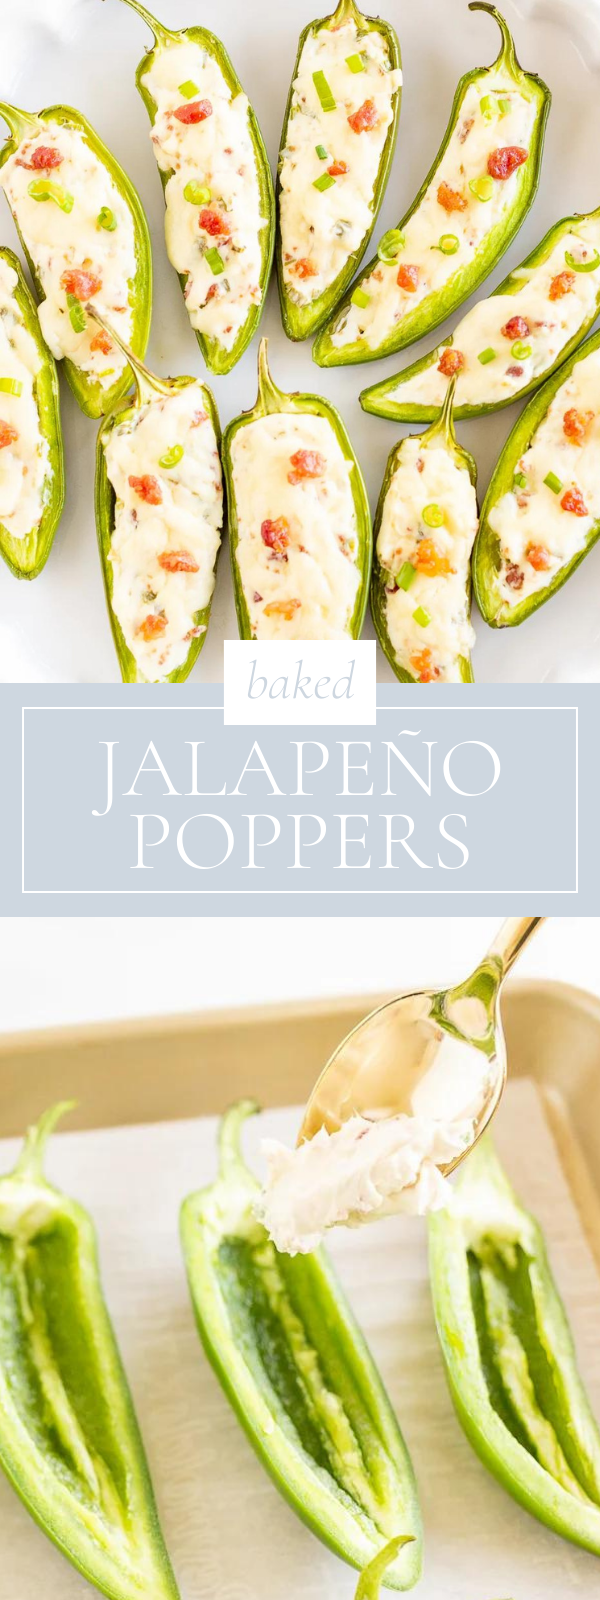 Jalapeno poppers carefully arranged on a tray.